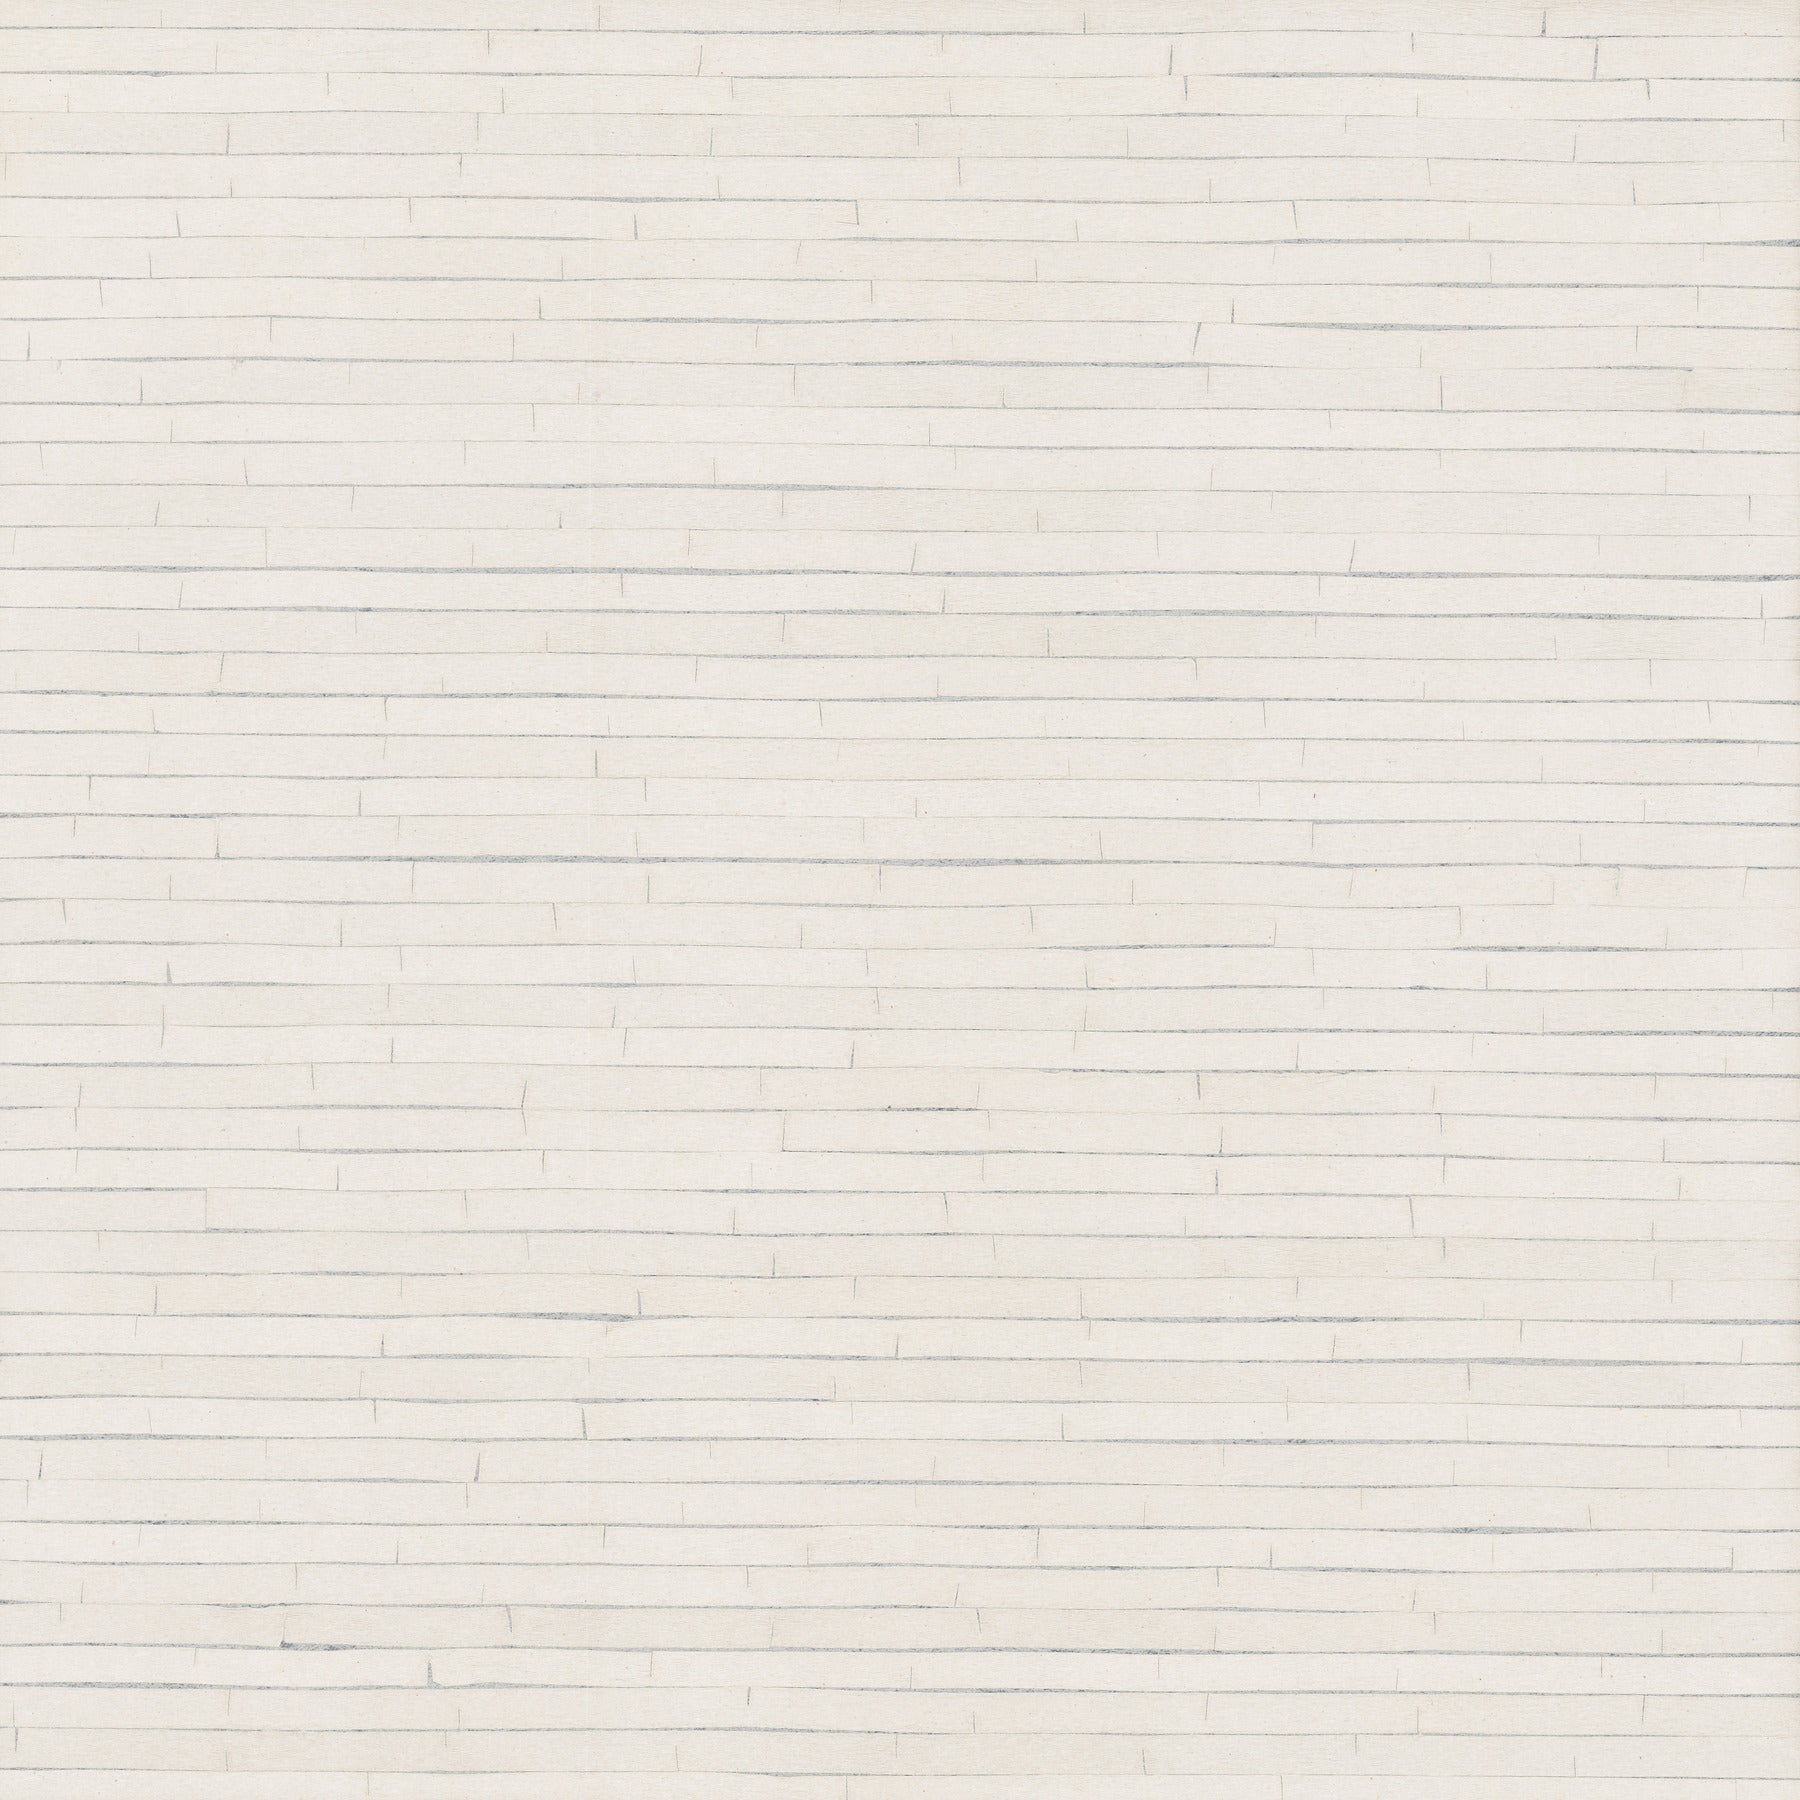 Handcrafted Shimmering Wallpaper Wallpaper Ronald Redding Designs Yard White/Silver 